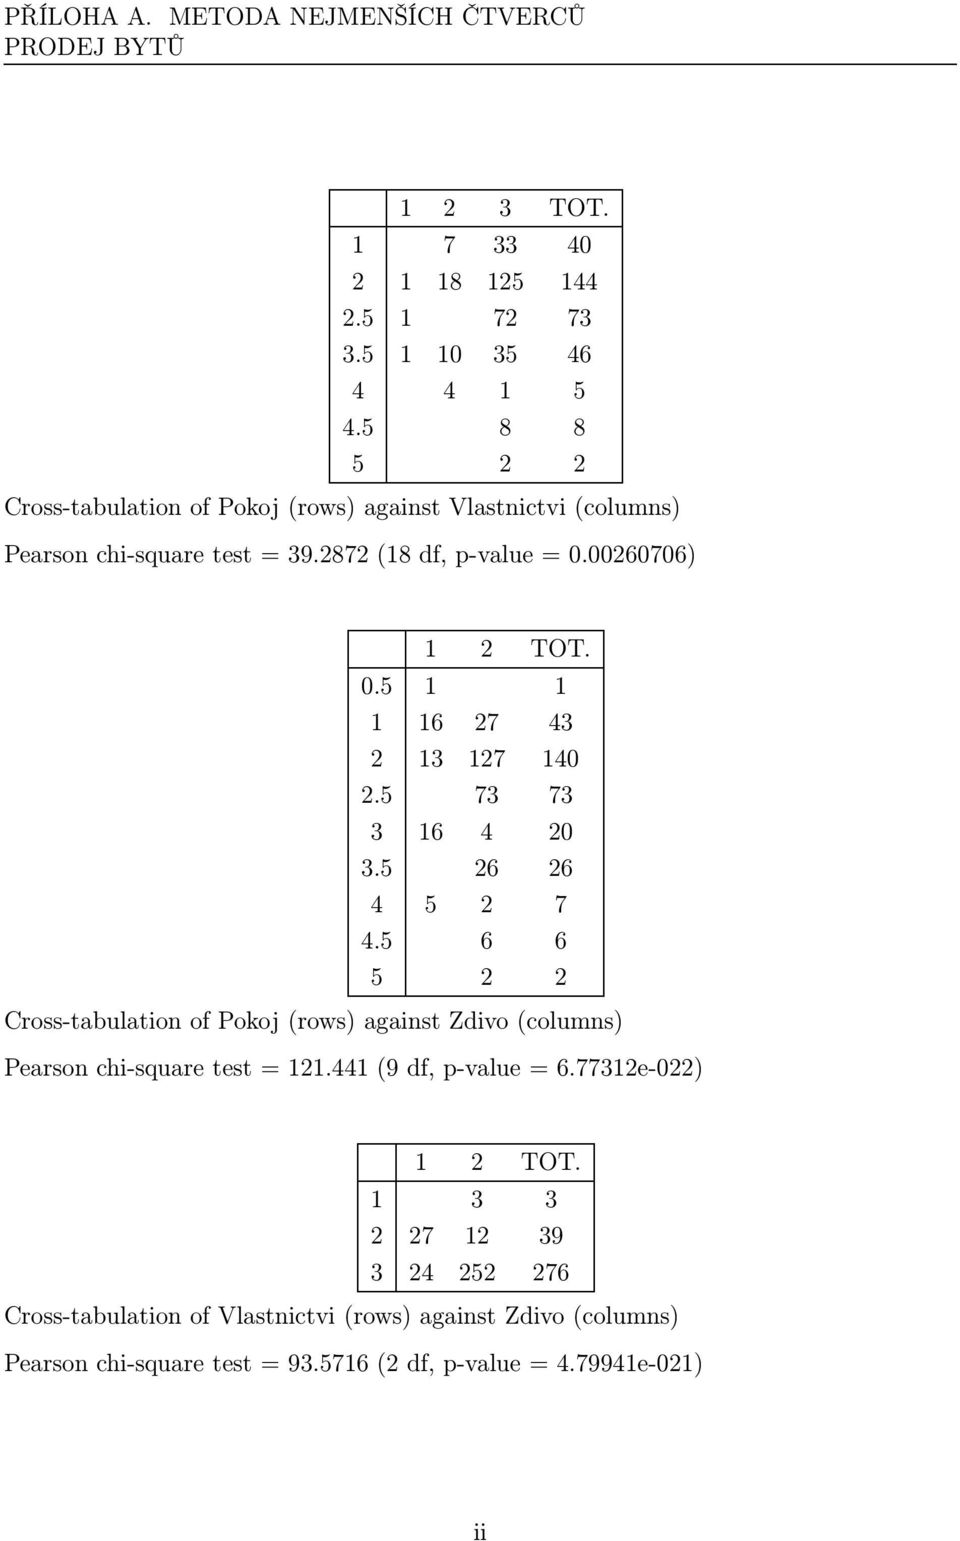 5 73 73 3 16 4 20 3.5 26 26 4 5 2 7 4.5 6 6 5 2 2 Cross-tabulation of Pokoj(rows) against Zdivo(columns) Pearson chi-square test = 121.441(9 df, p-value = 6.